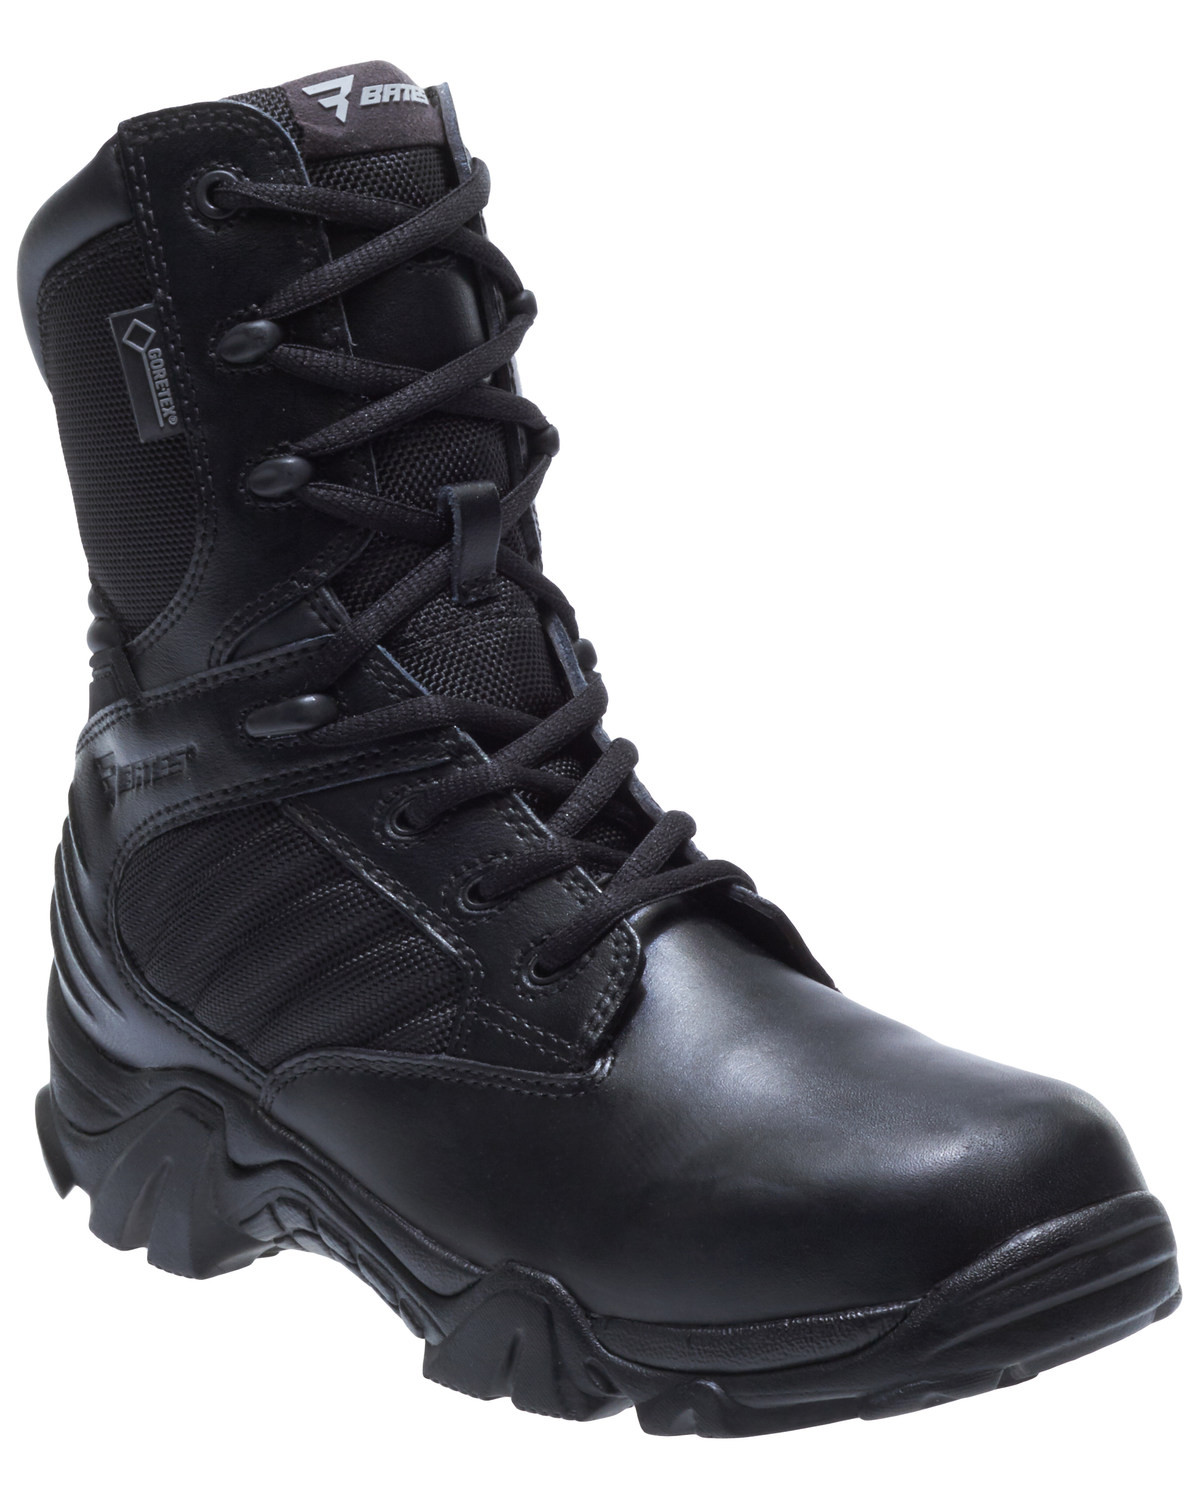 Bates Women's GX-8 Side Zip Work Boots - Soft Toe